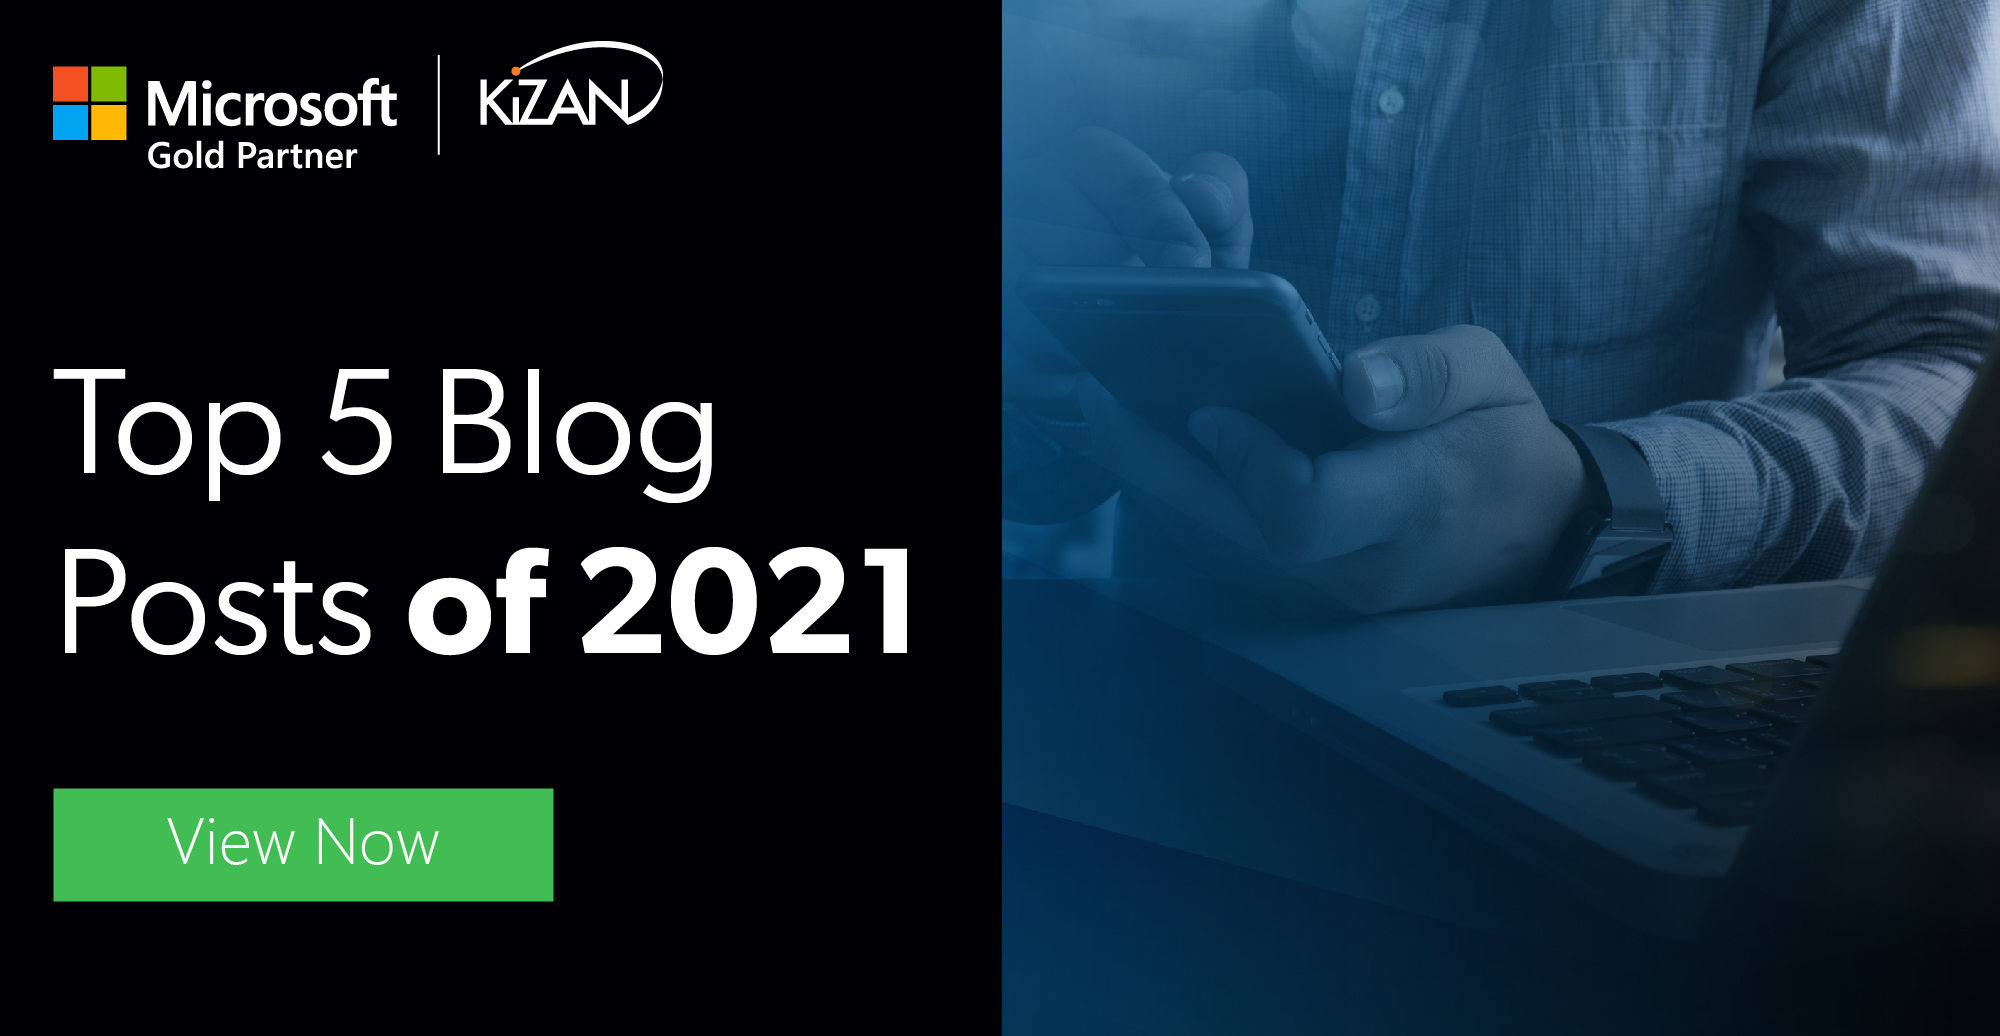 KiZAN | Top 5 Blog Posts of 2021